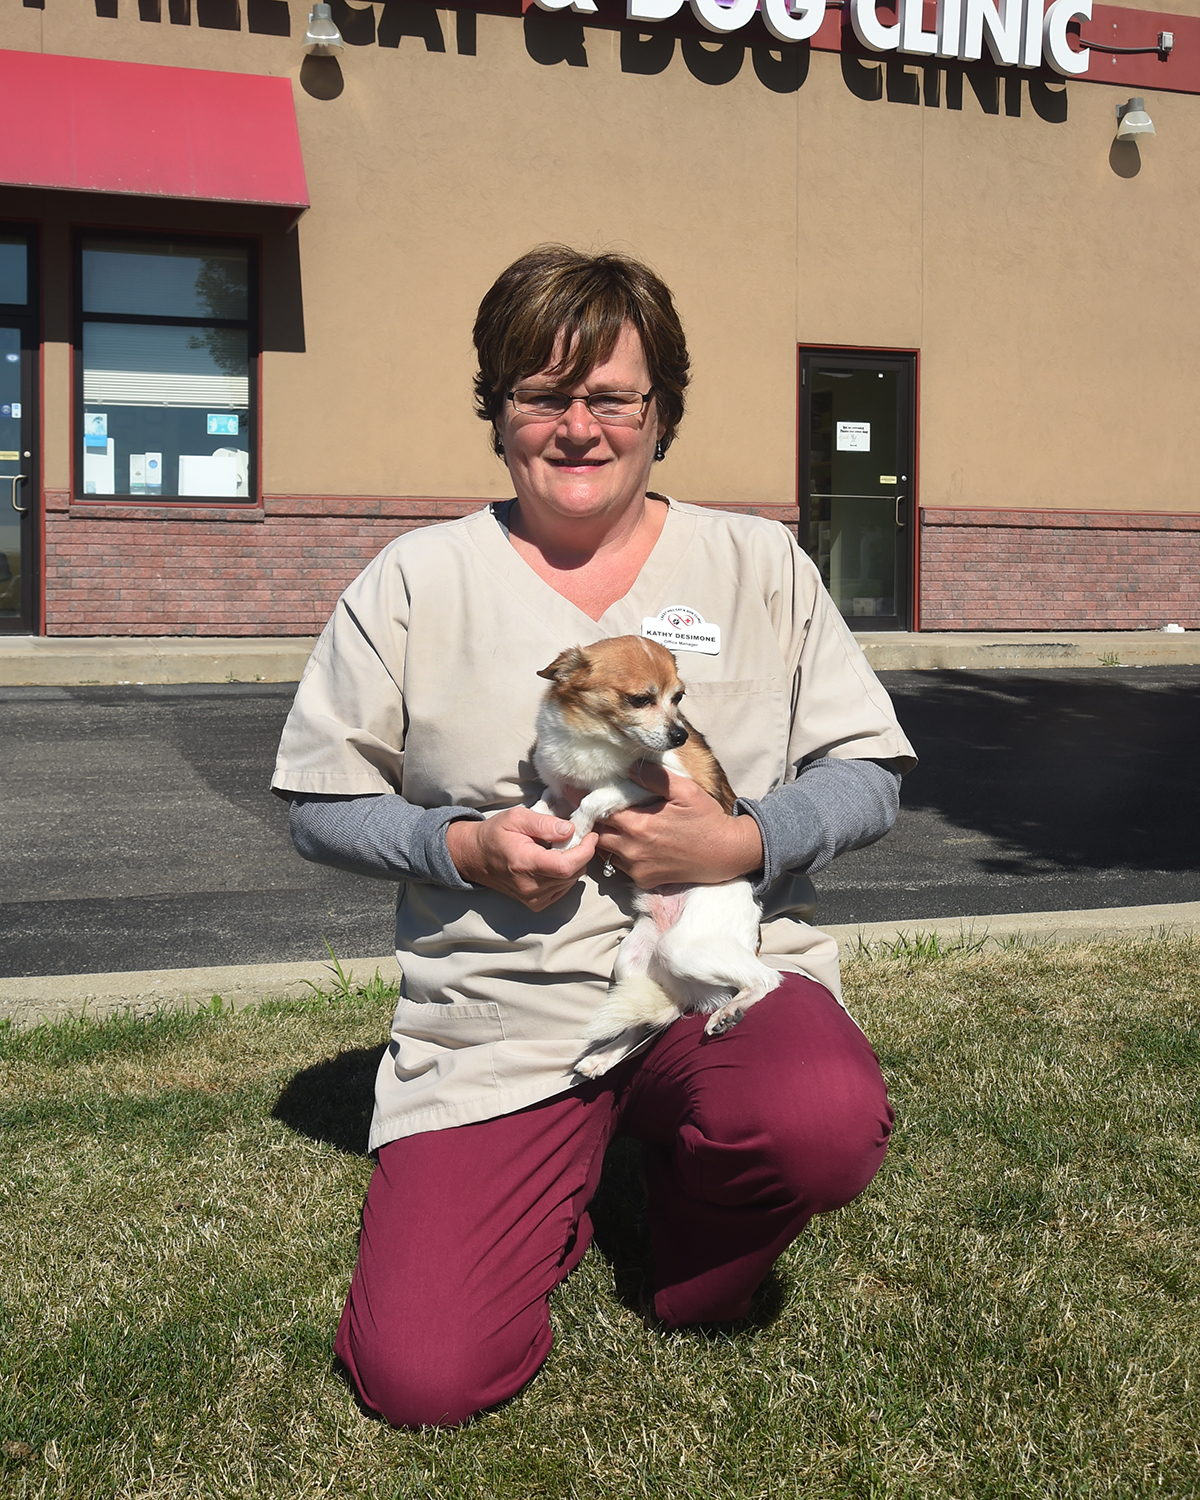 Crest Hill Cat and Dog Clinic Veterinarian in Joliet, IL US Meet